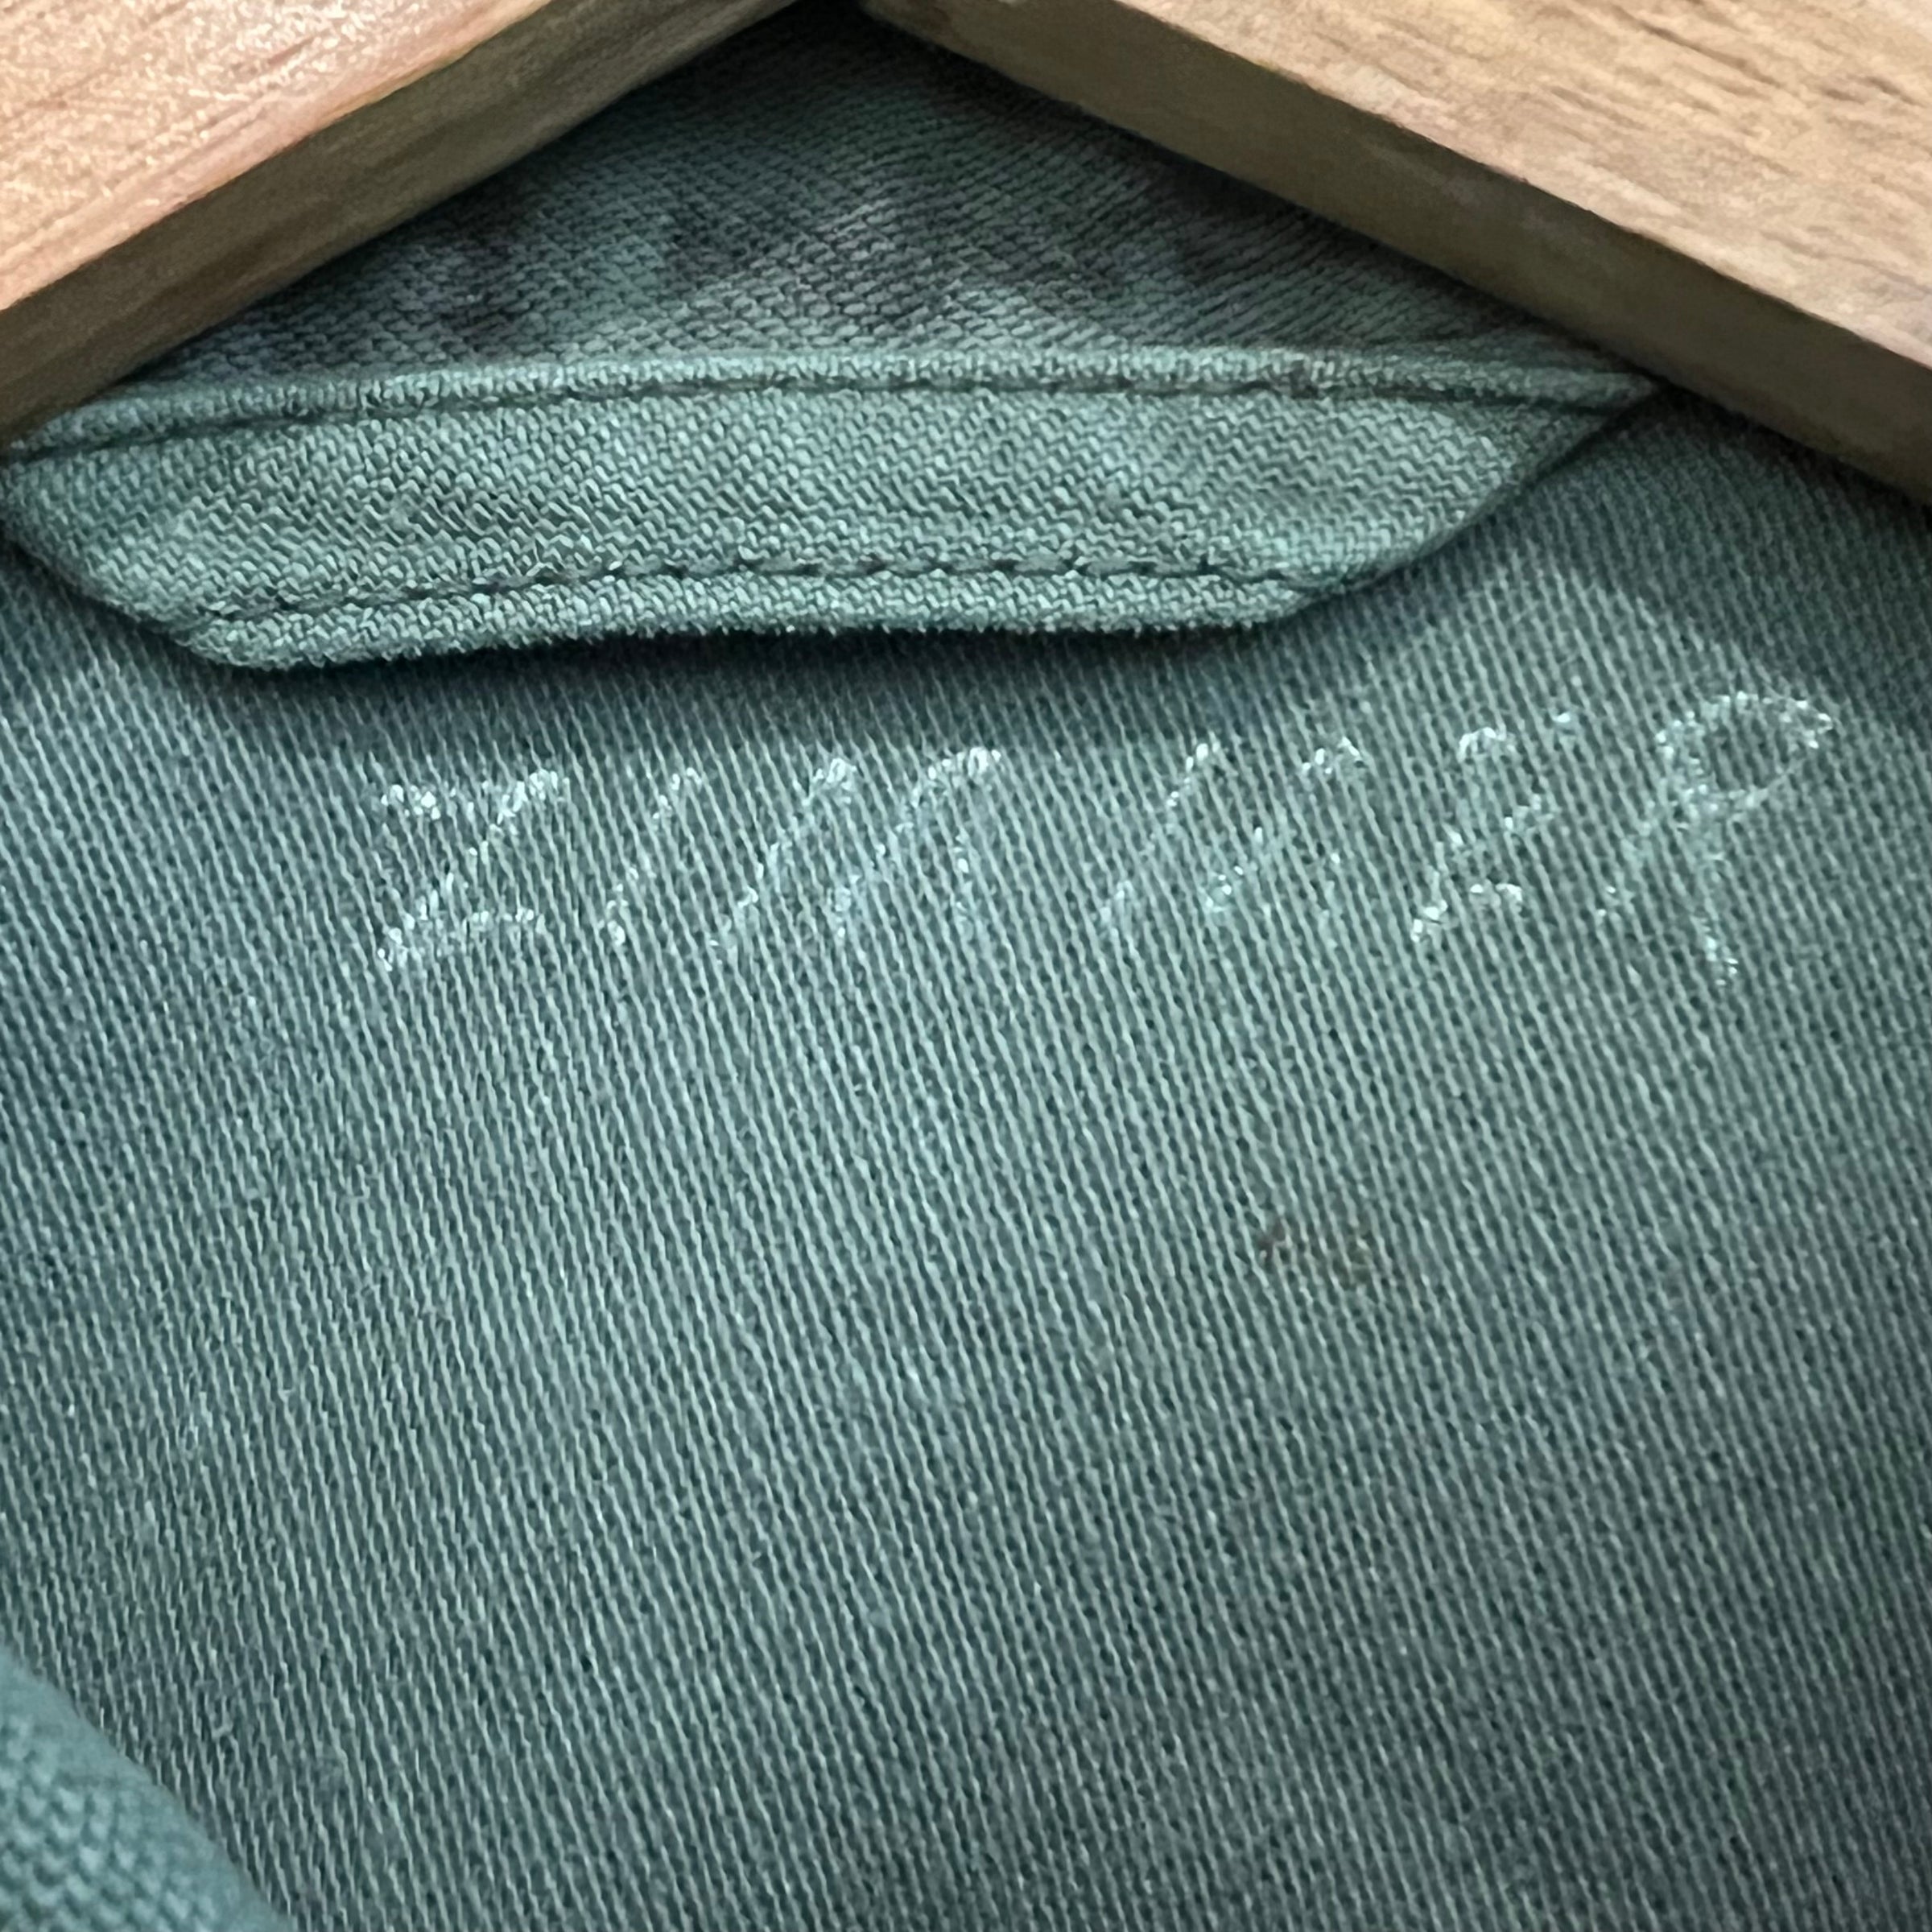 Early 1950’s Sage Green USAF Uniform Shirt Small